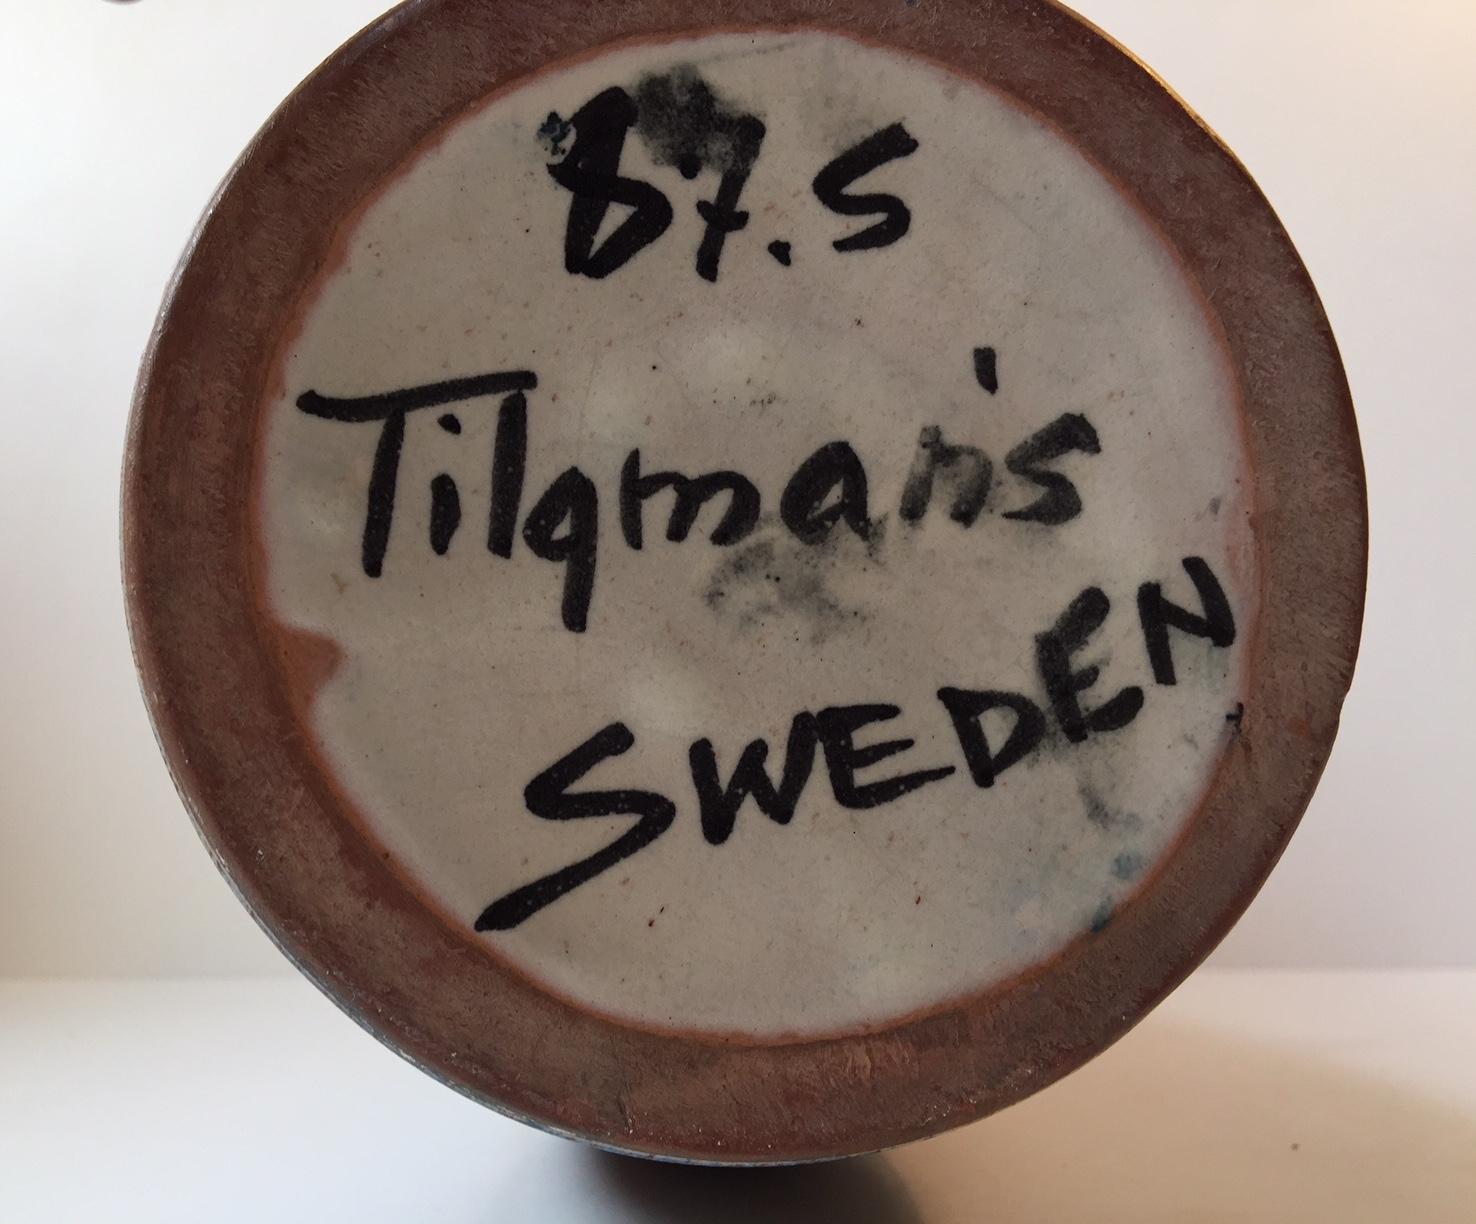 Swedish Vintage Scandinavian Pottery Vase with Ducks & Bulrush Decor by Tilgmans, Sweden